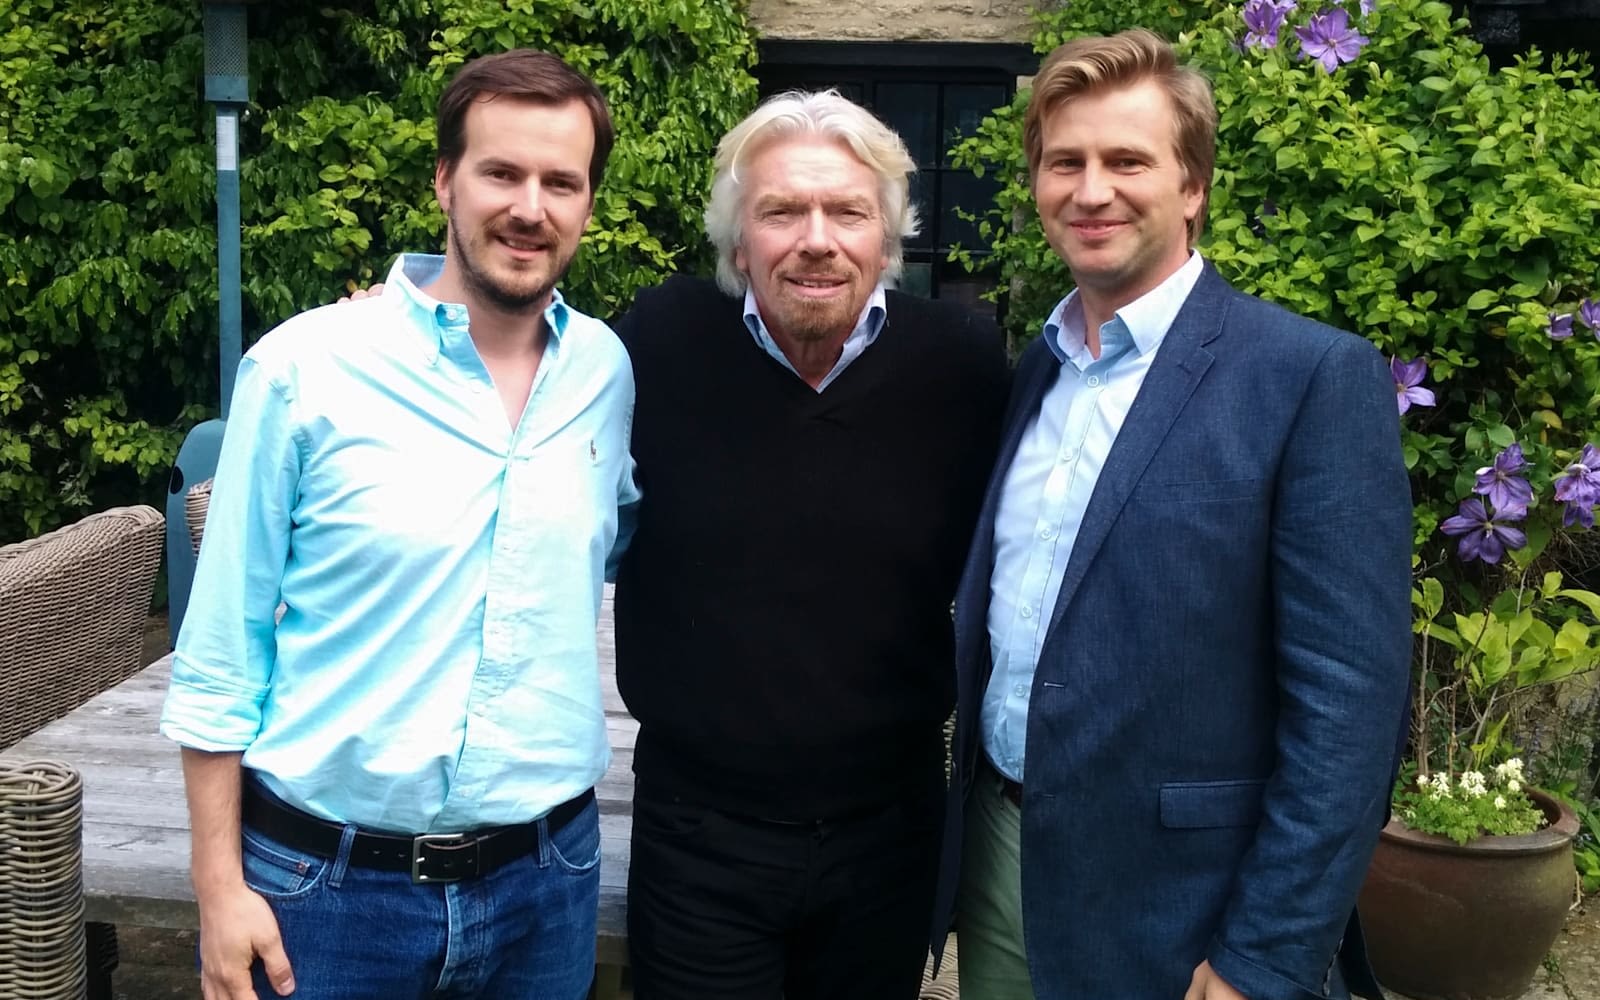 Richard Branson with Transferwise founders Taavet Hinrikus and Kristo Kaarmann